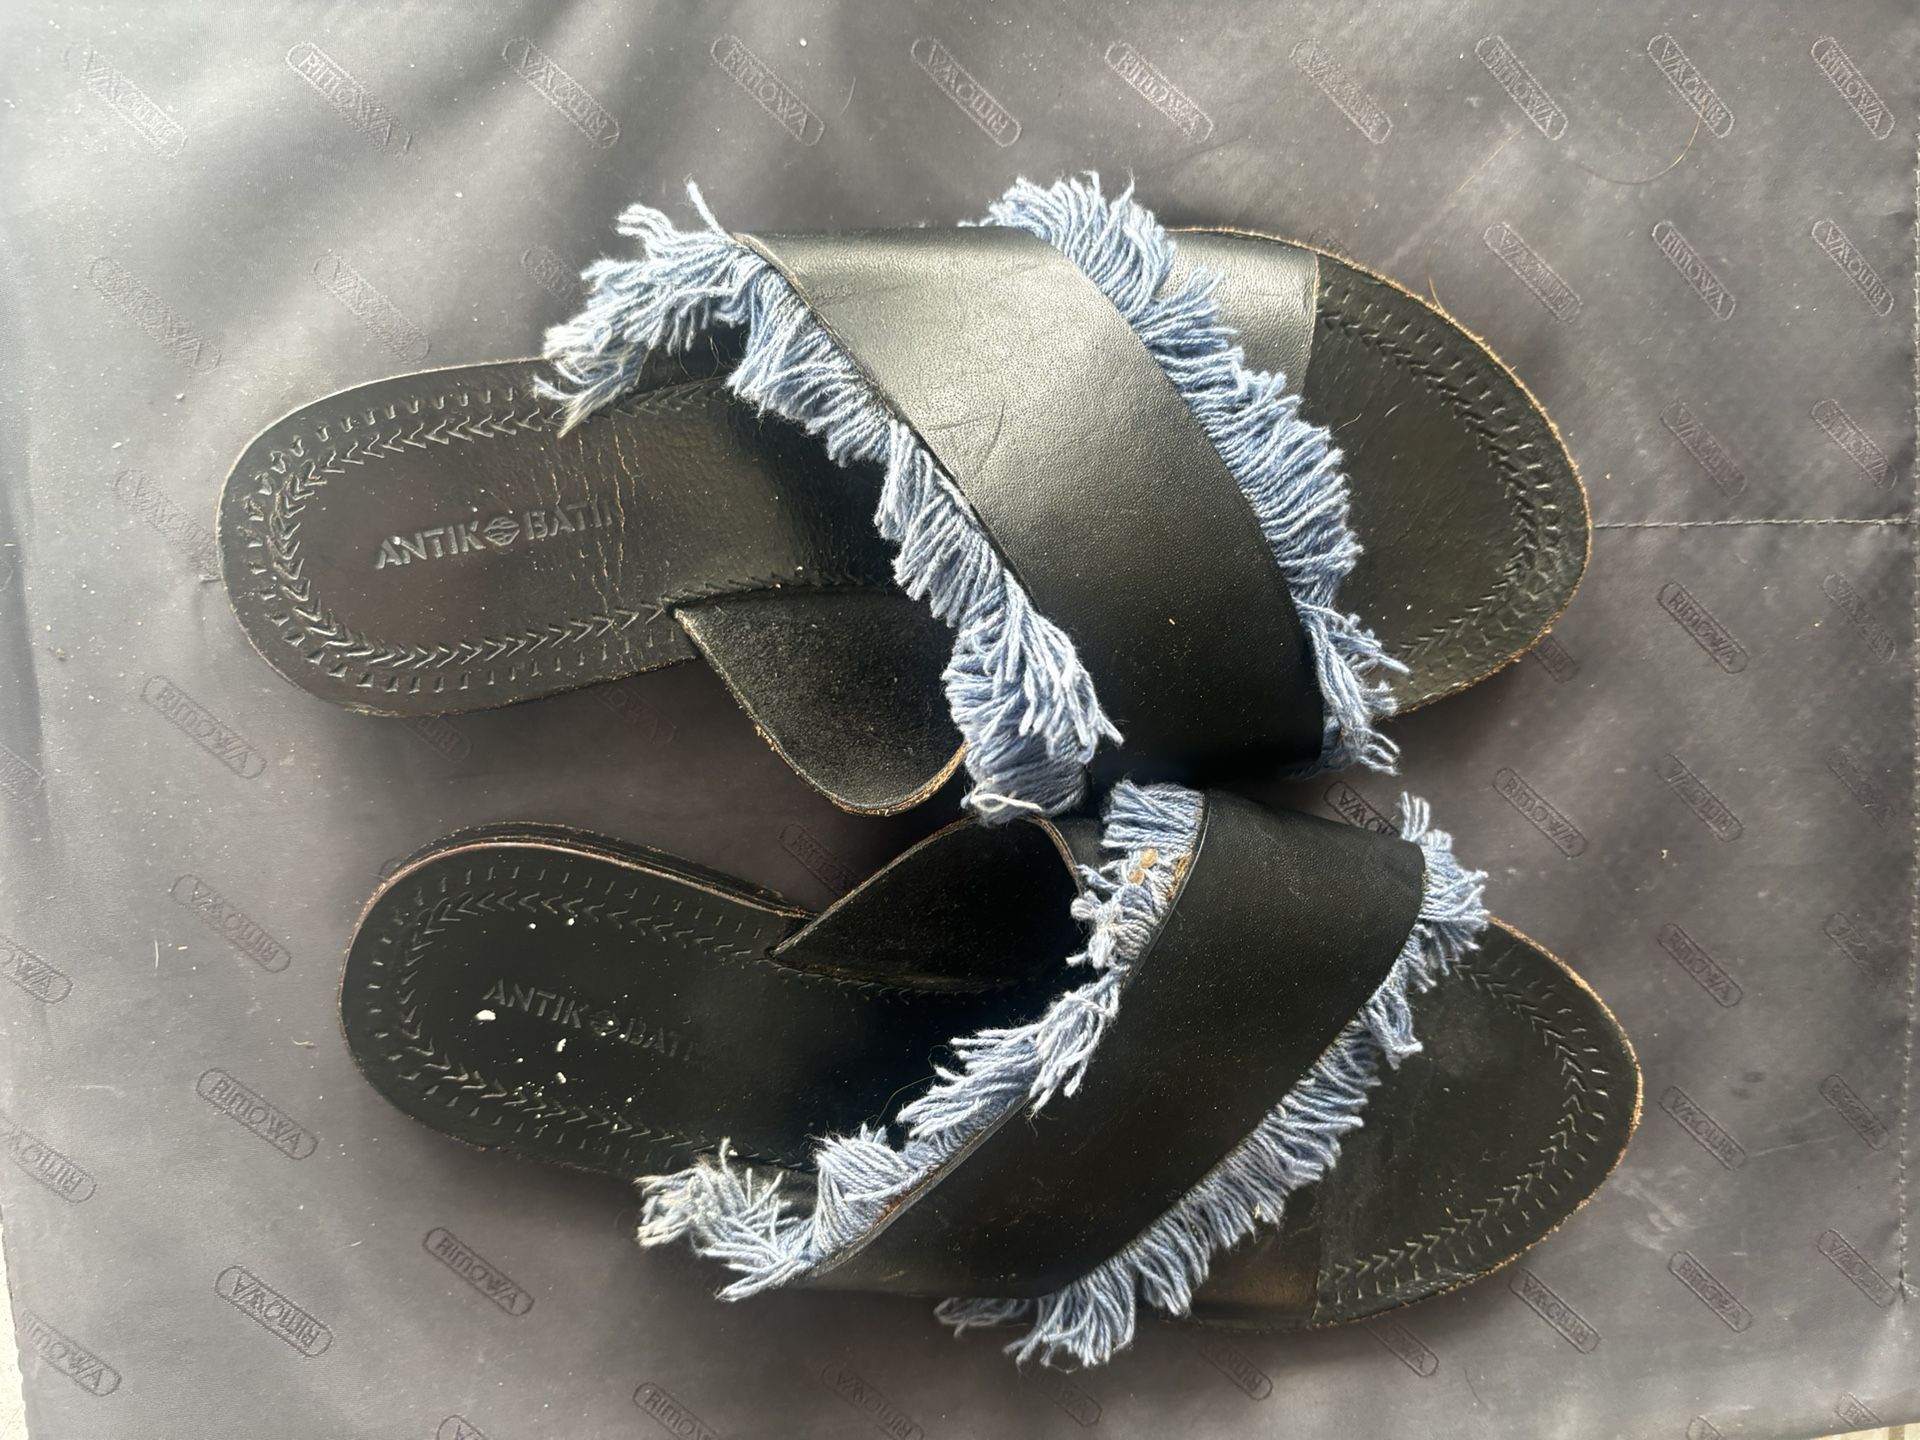 Anthropologie Antik Batik Sandals Fringe flats crisscross tweed distressed shoes